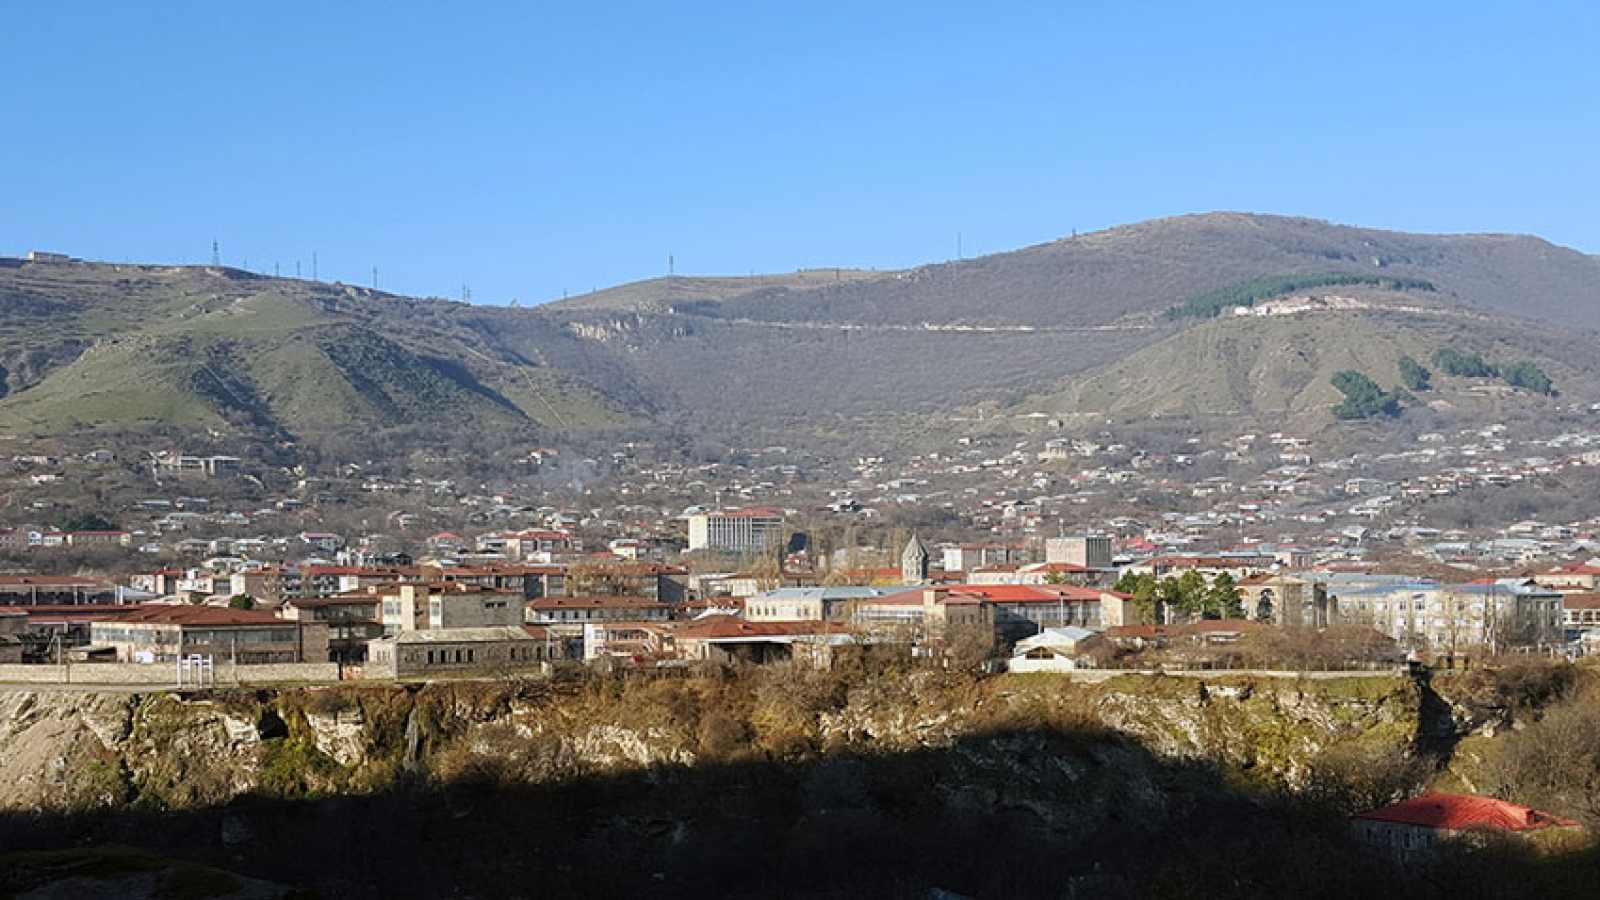 Goris declared as CIS Cultural Capital for 2018